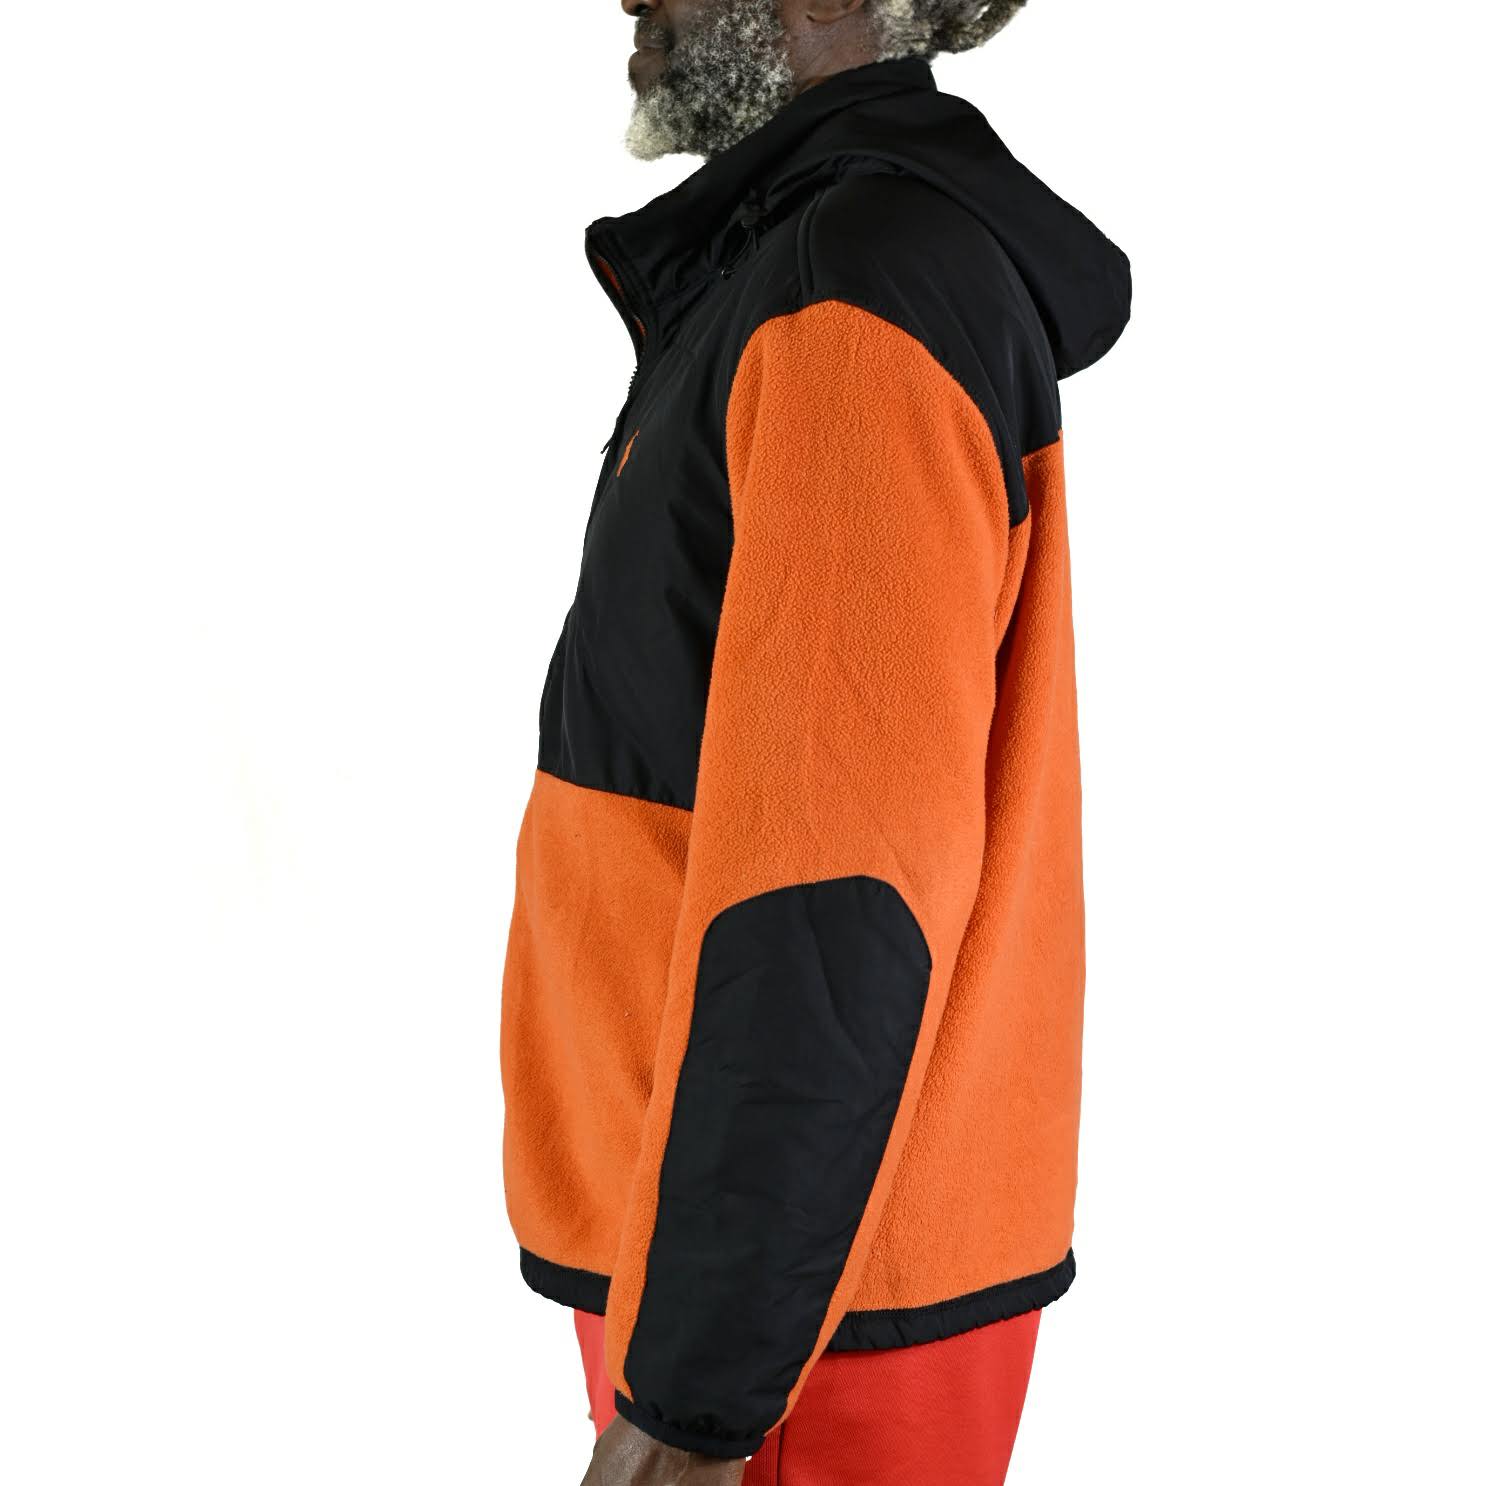 Polo Ralph Lauren Denali Fleece Jacket Size XL Mens